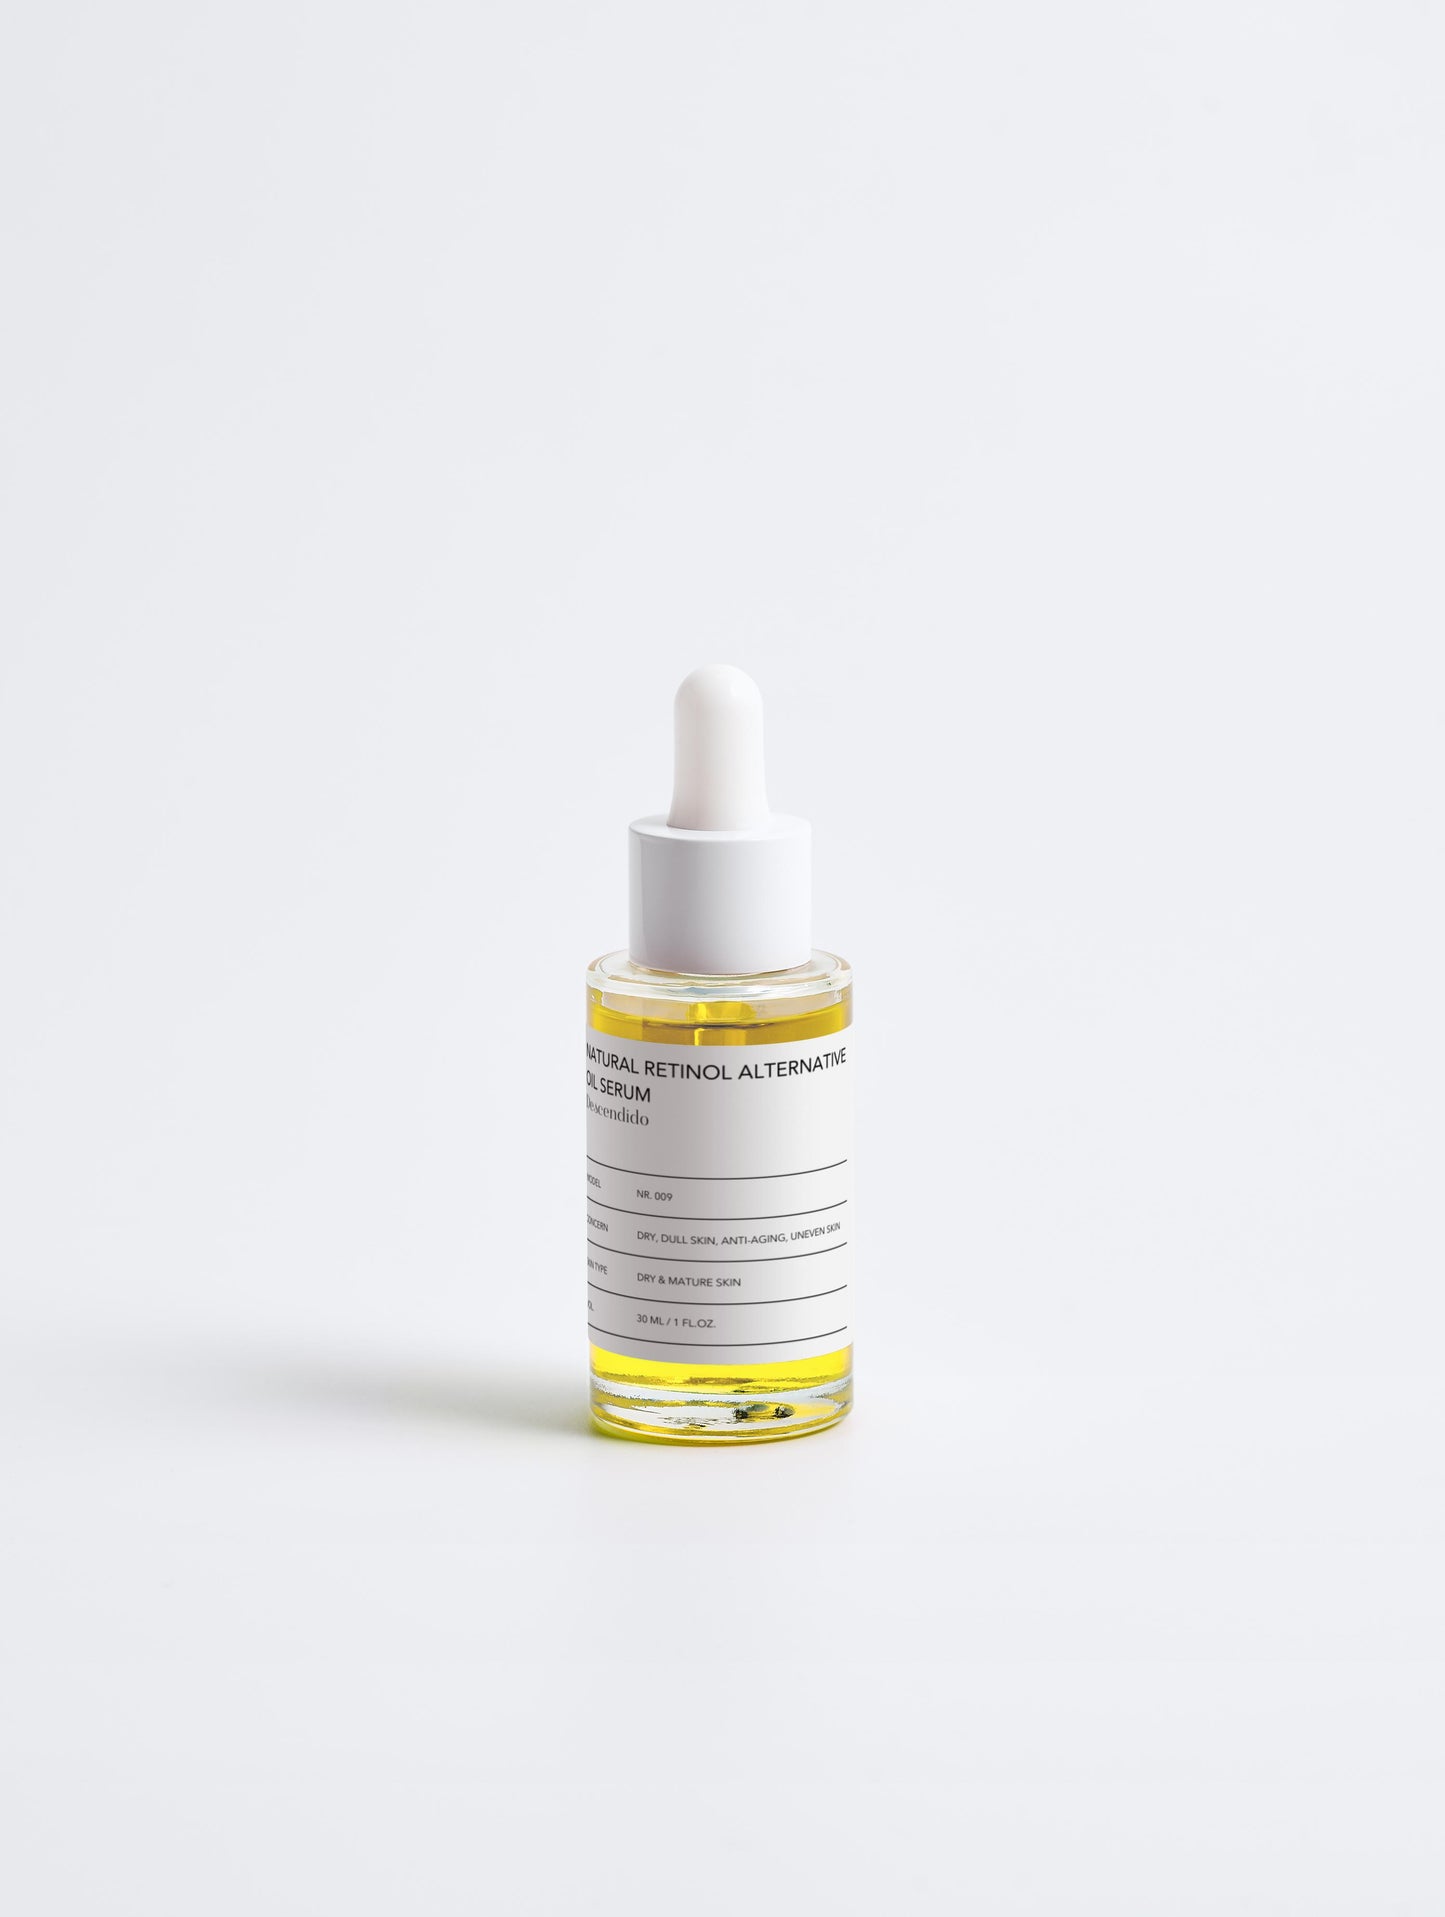 Natural retinol alternative oil serum